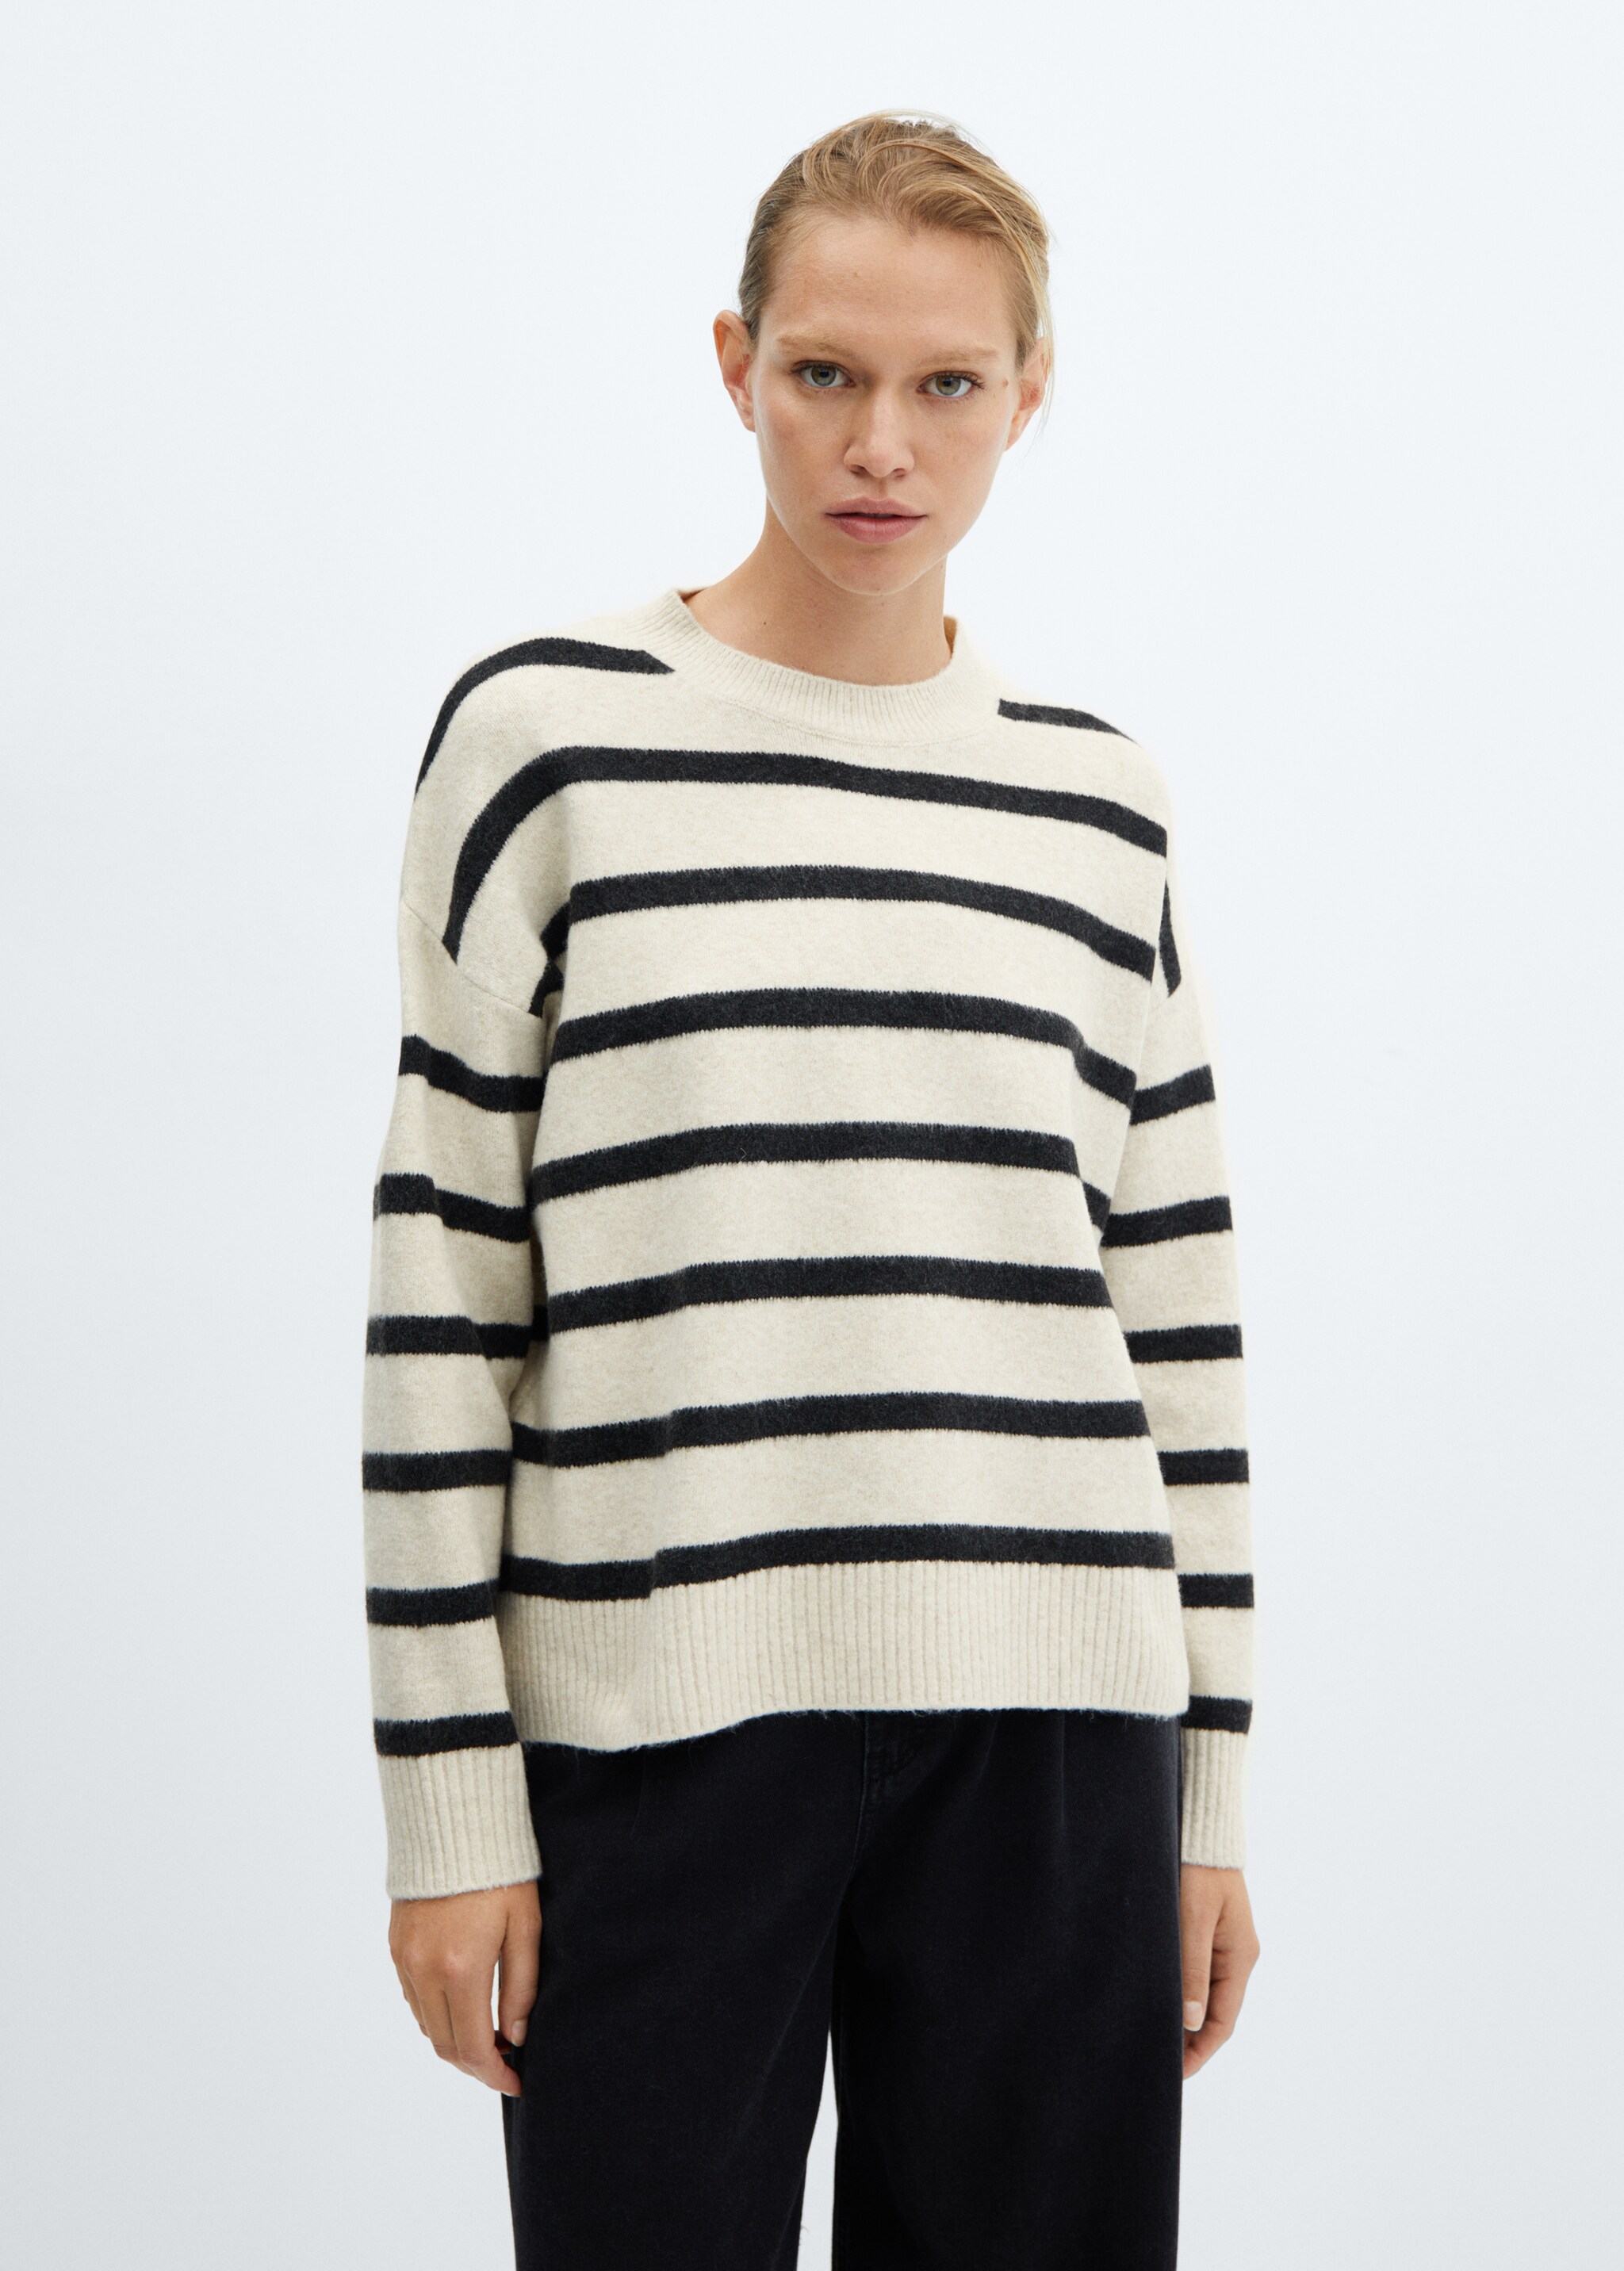 Round-neck striped sweater - Medium plane